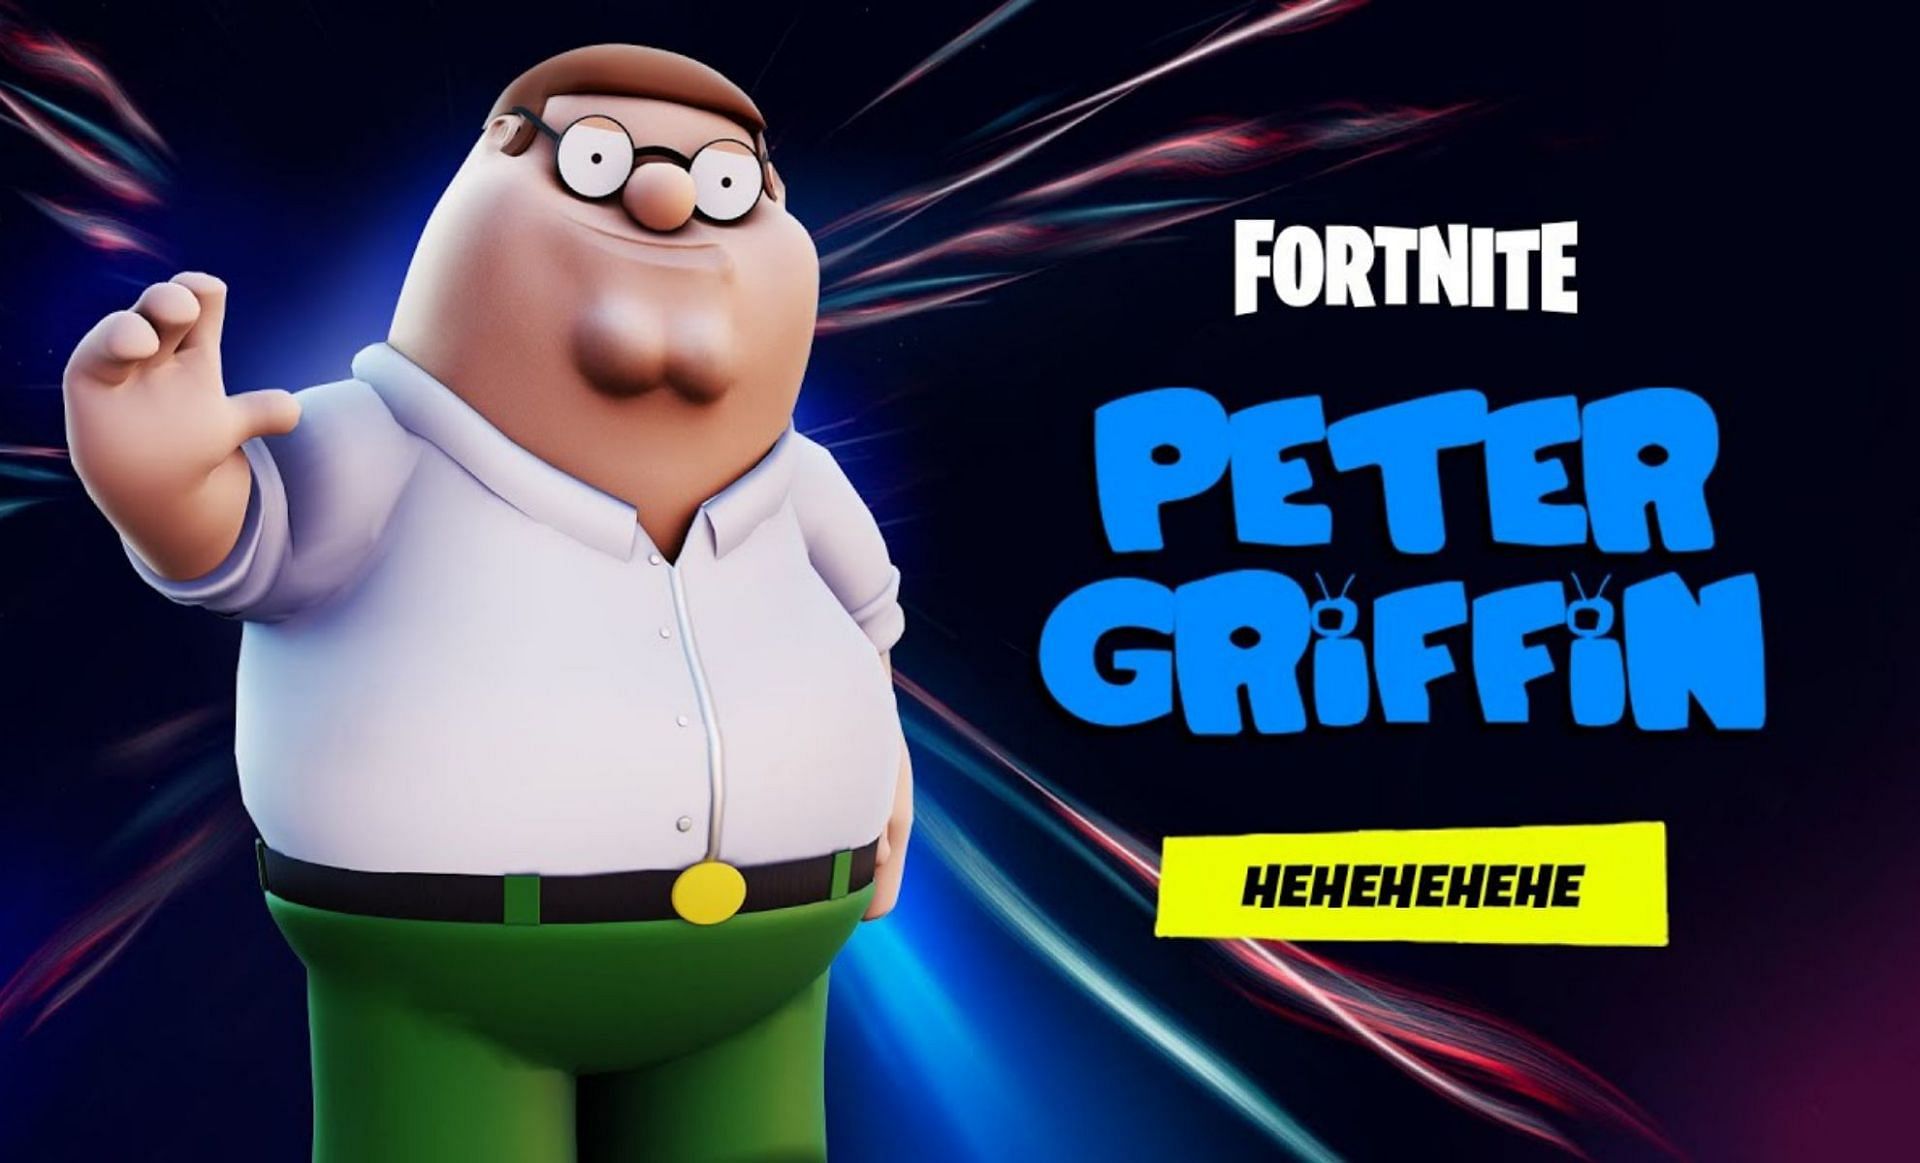 Fortnite x Family Guy may have leaked (Image via FriendlyMachine on YouTube)